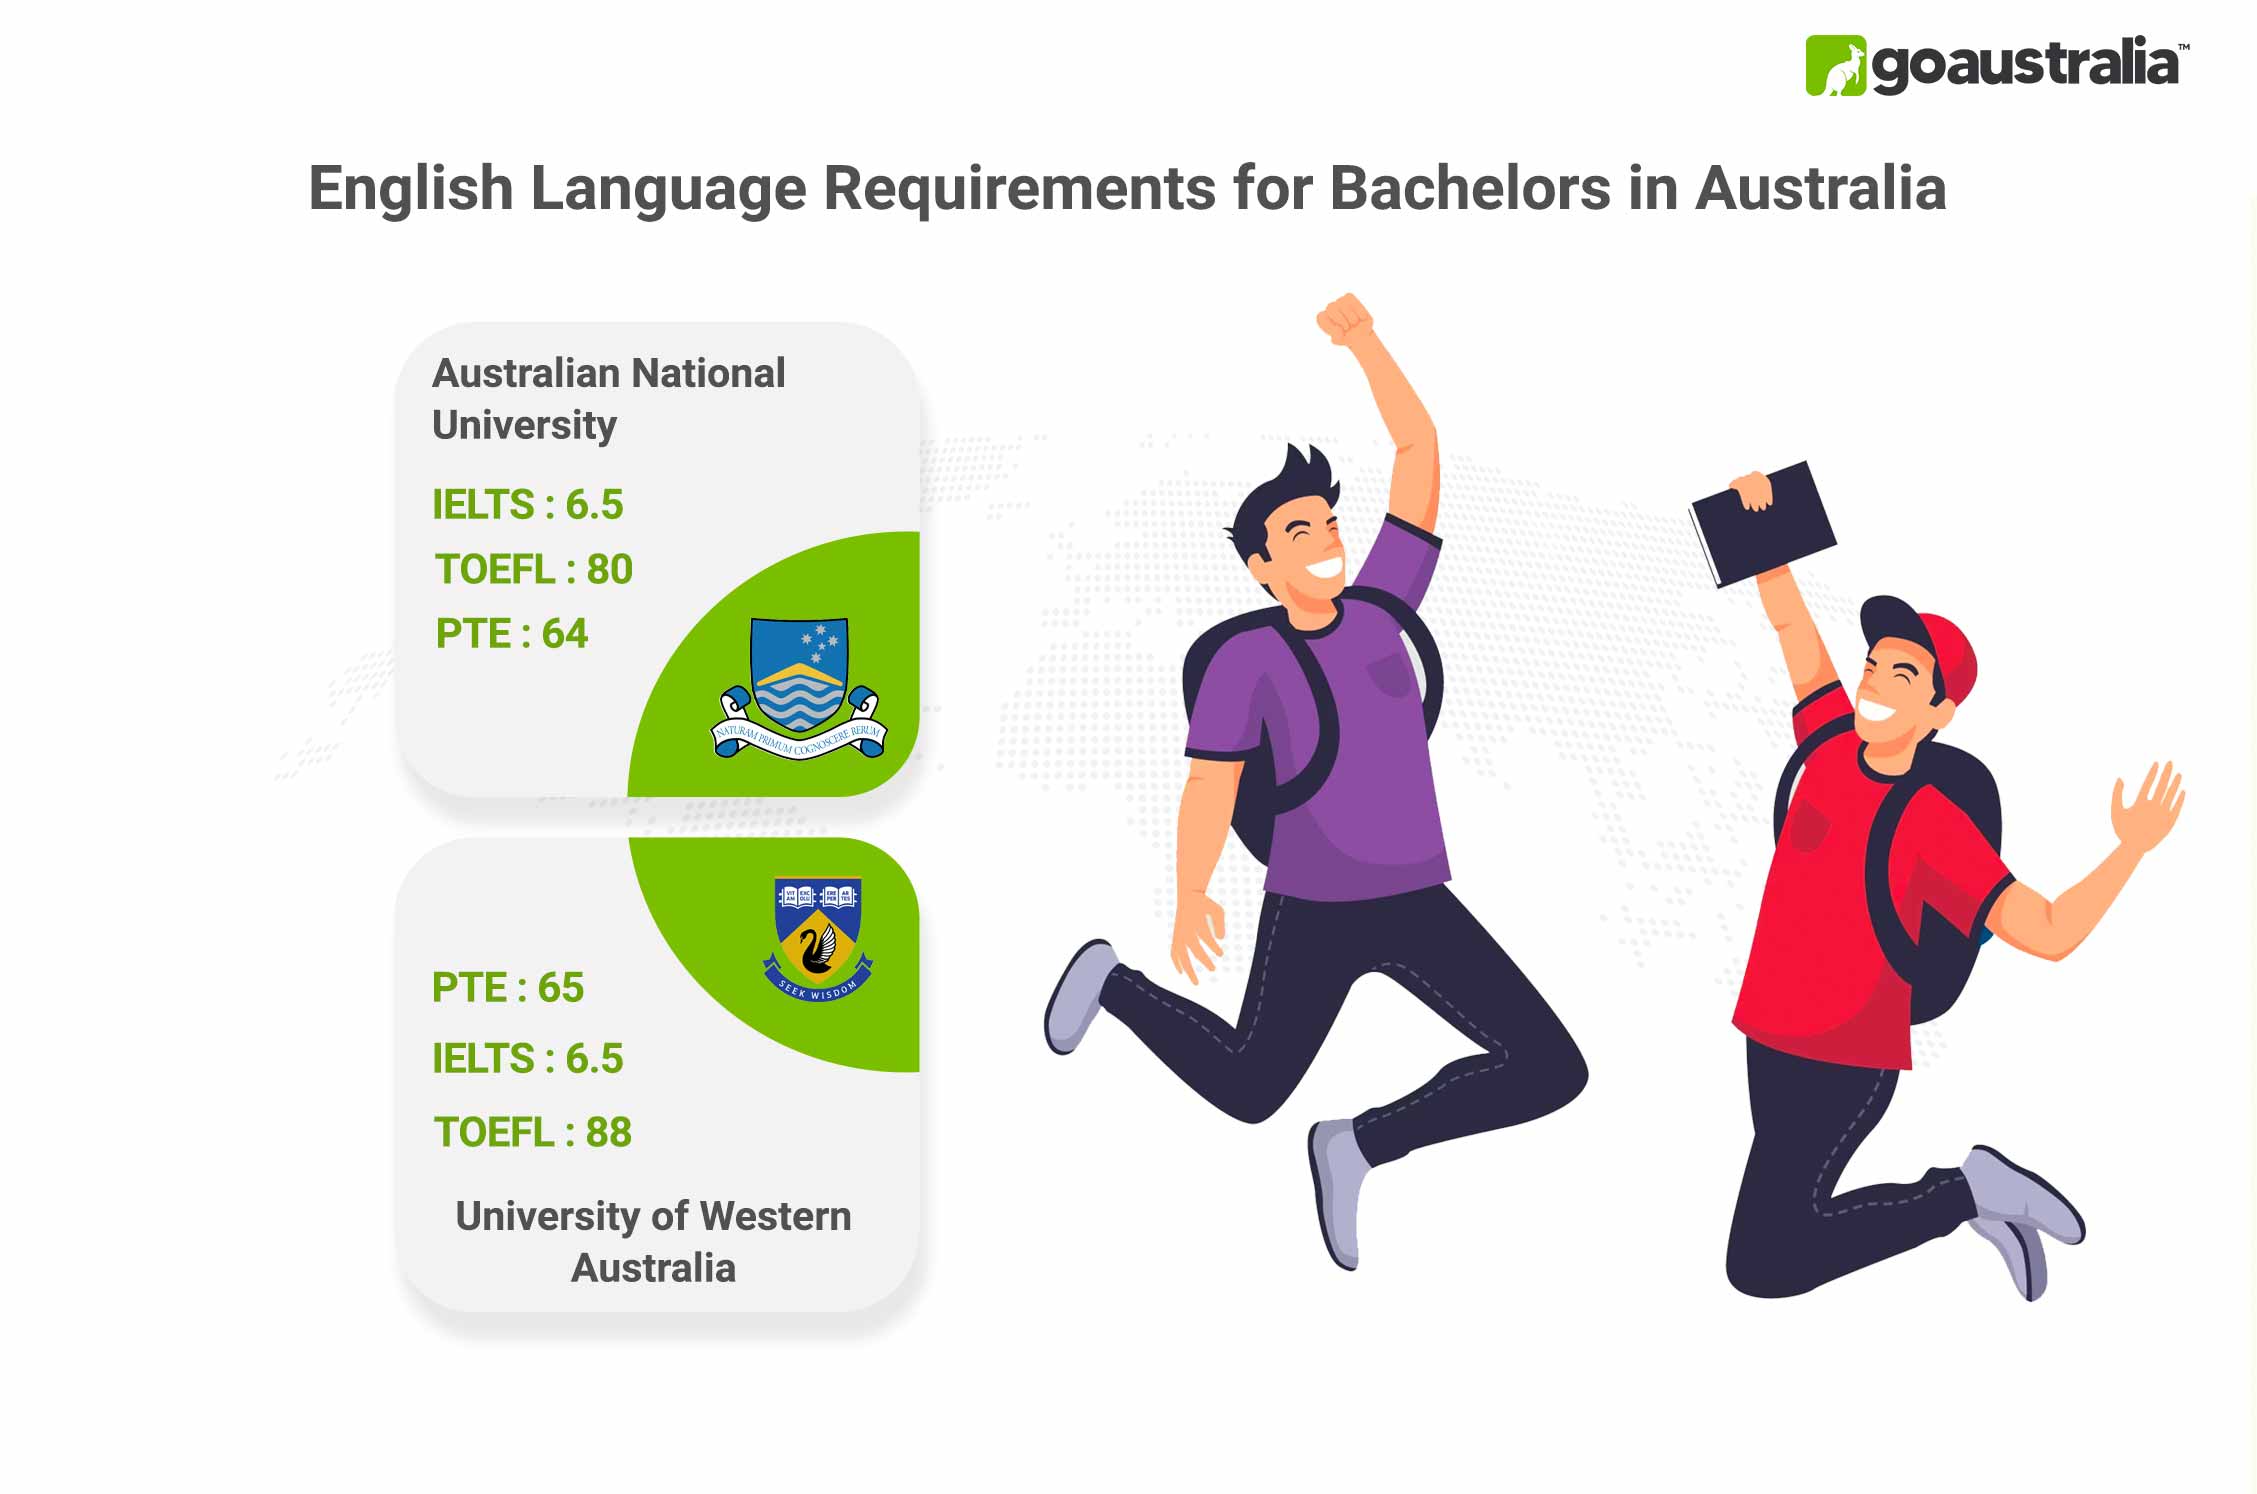 Bachelors in Australia English Language Requirements